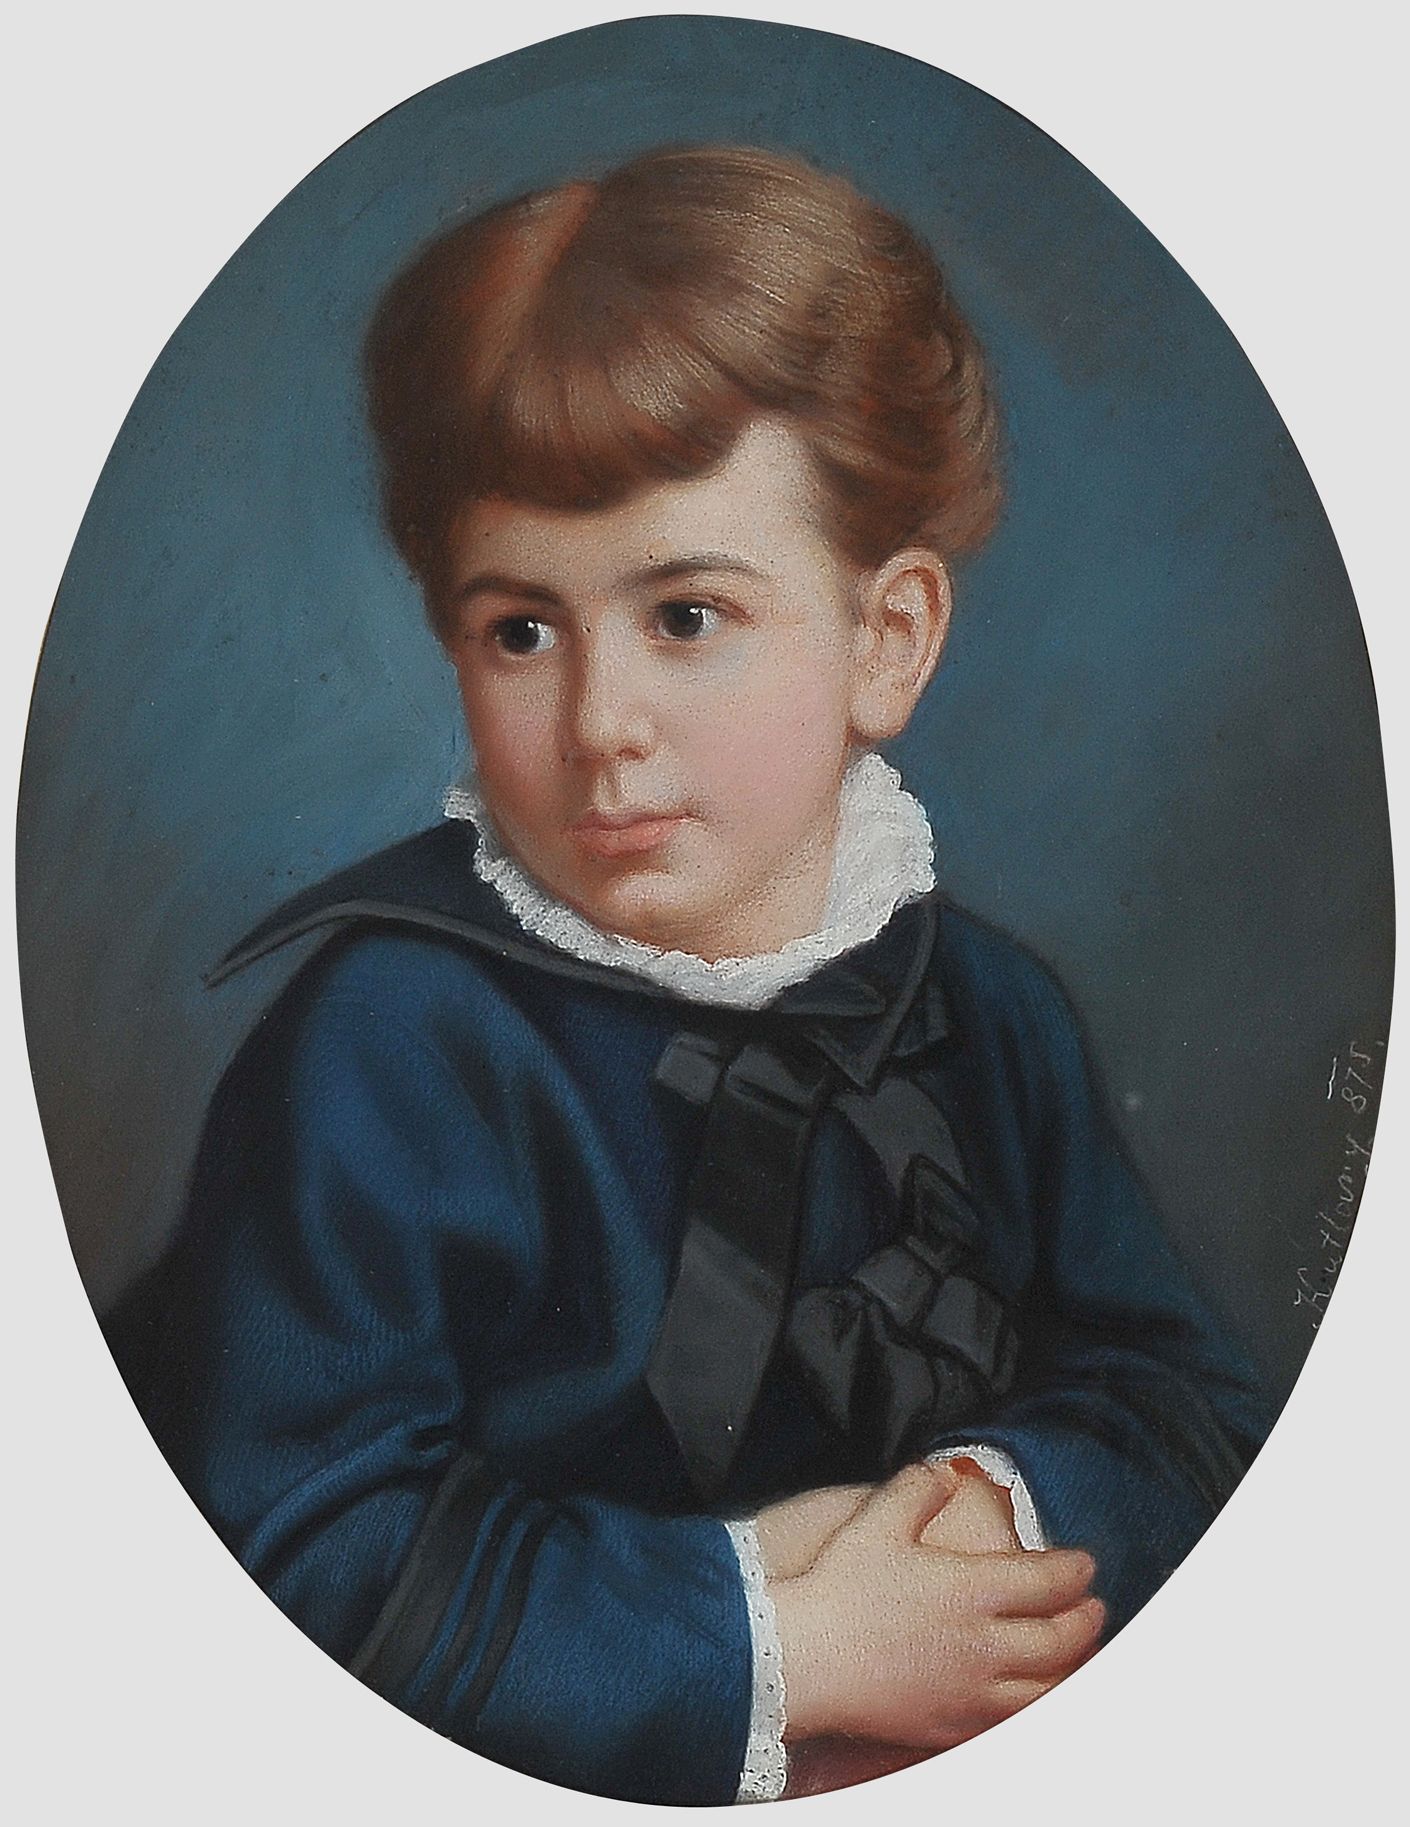 Null 约瑟夫-赫塔利


艾夏 1841 - 1890 布拉格


一个男孩的肖像


纸板上的粉笔画


49 x 38 cm


签名并注明日期(1)8&hellip;